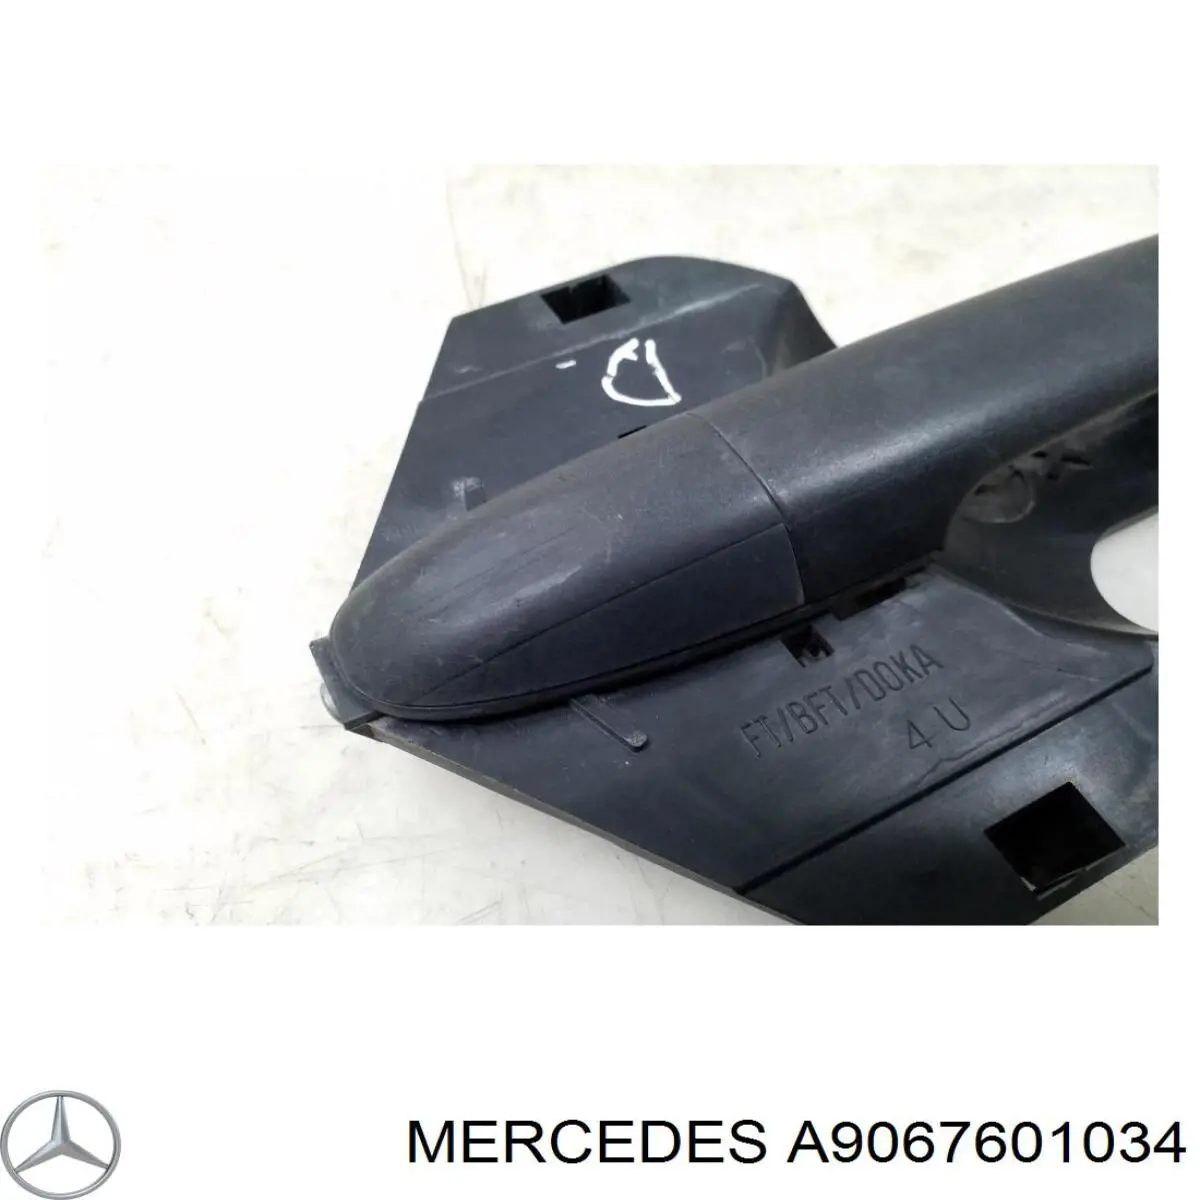 A9067601034 Mercedes soporte de manilla exterior de puerta delantera derecha